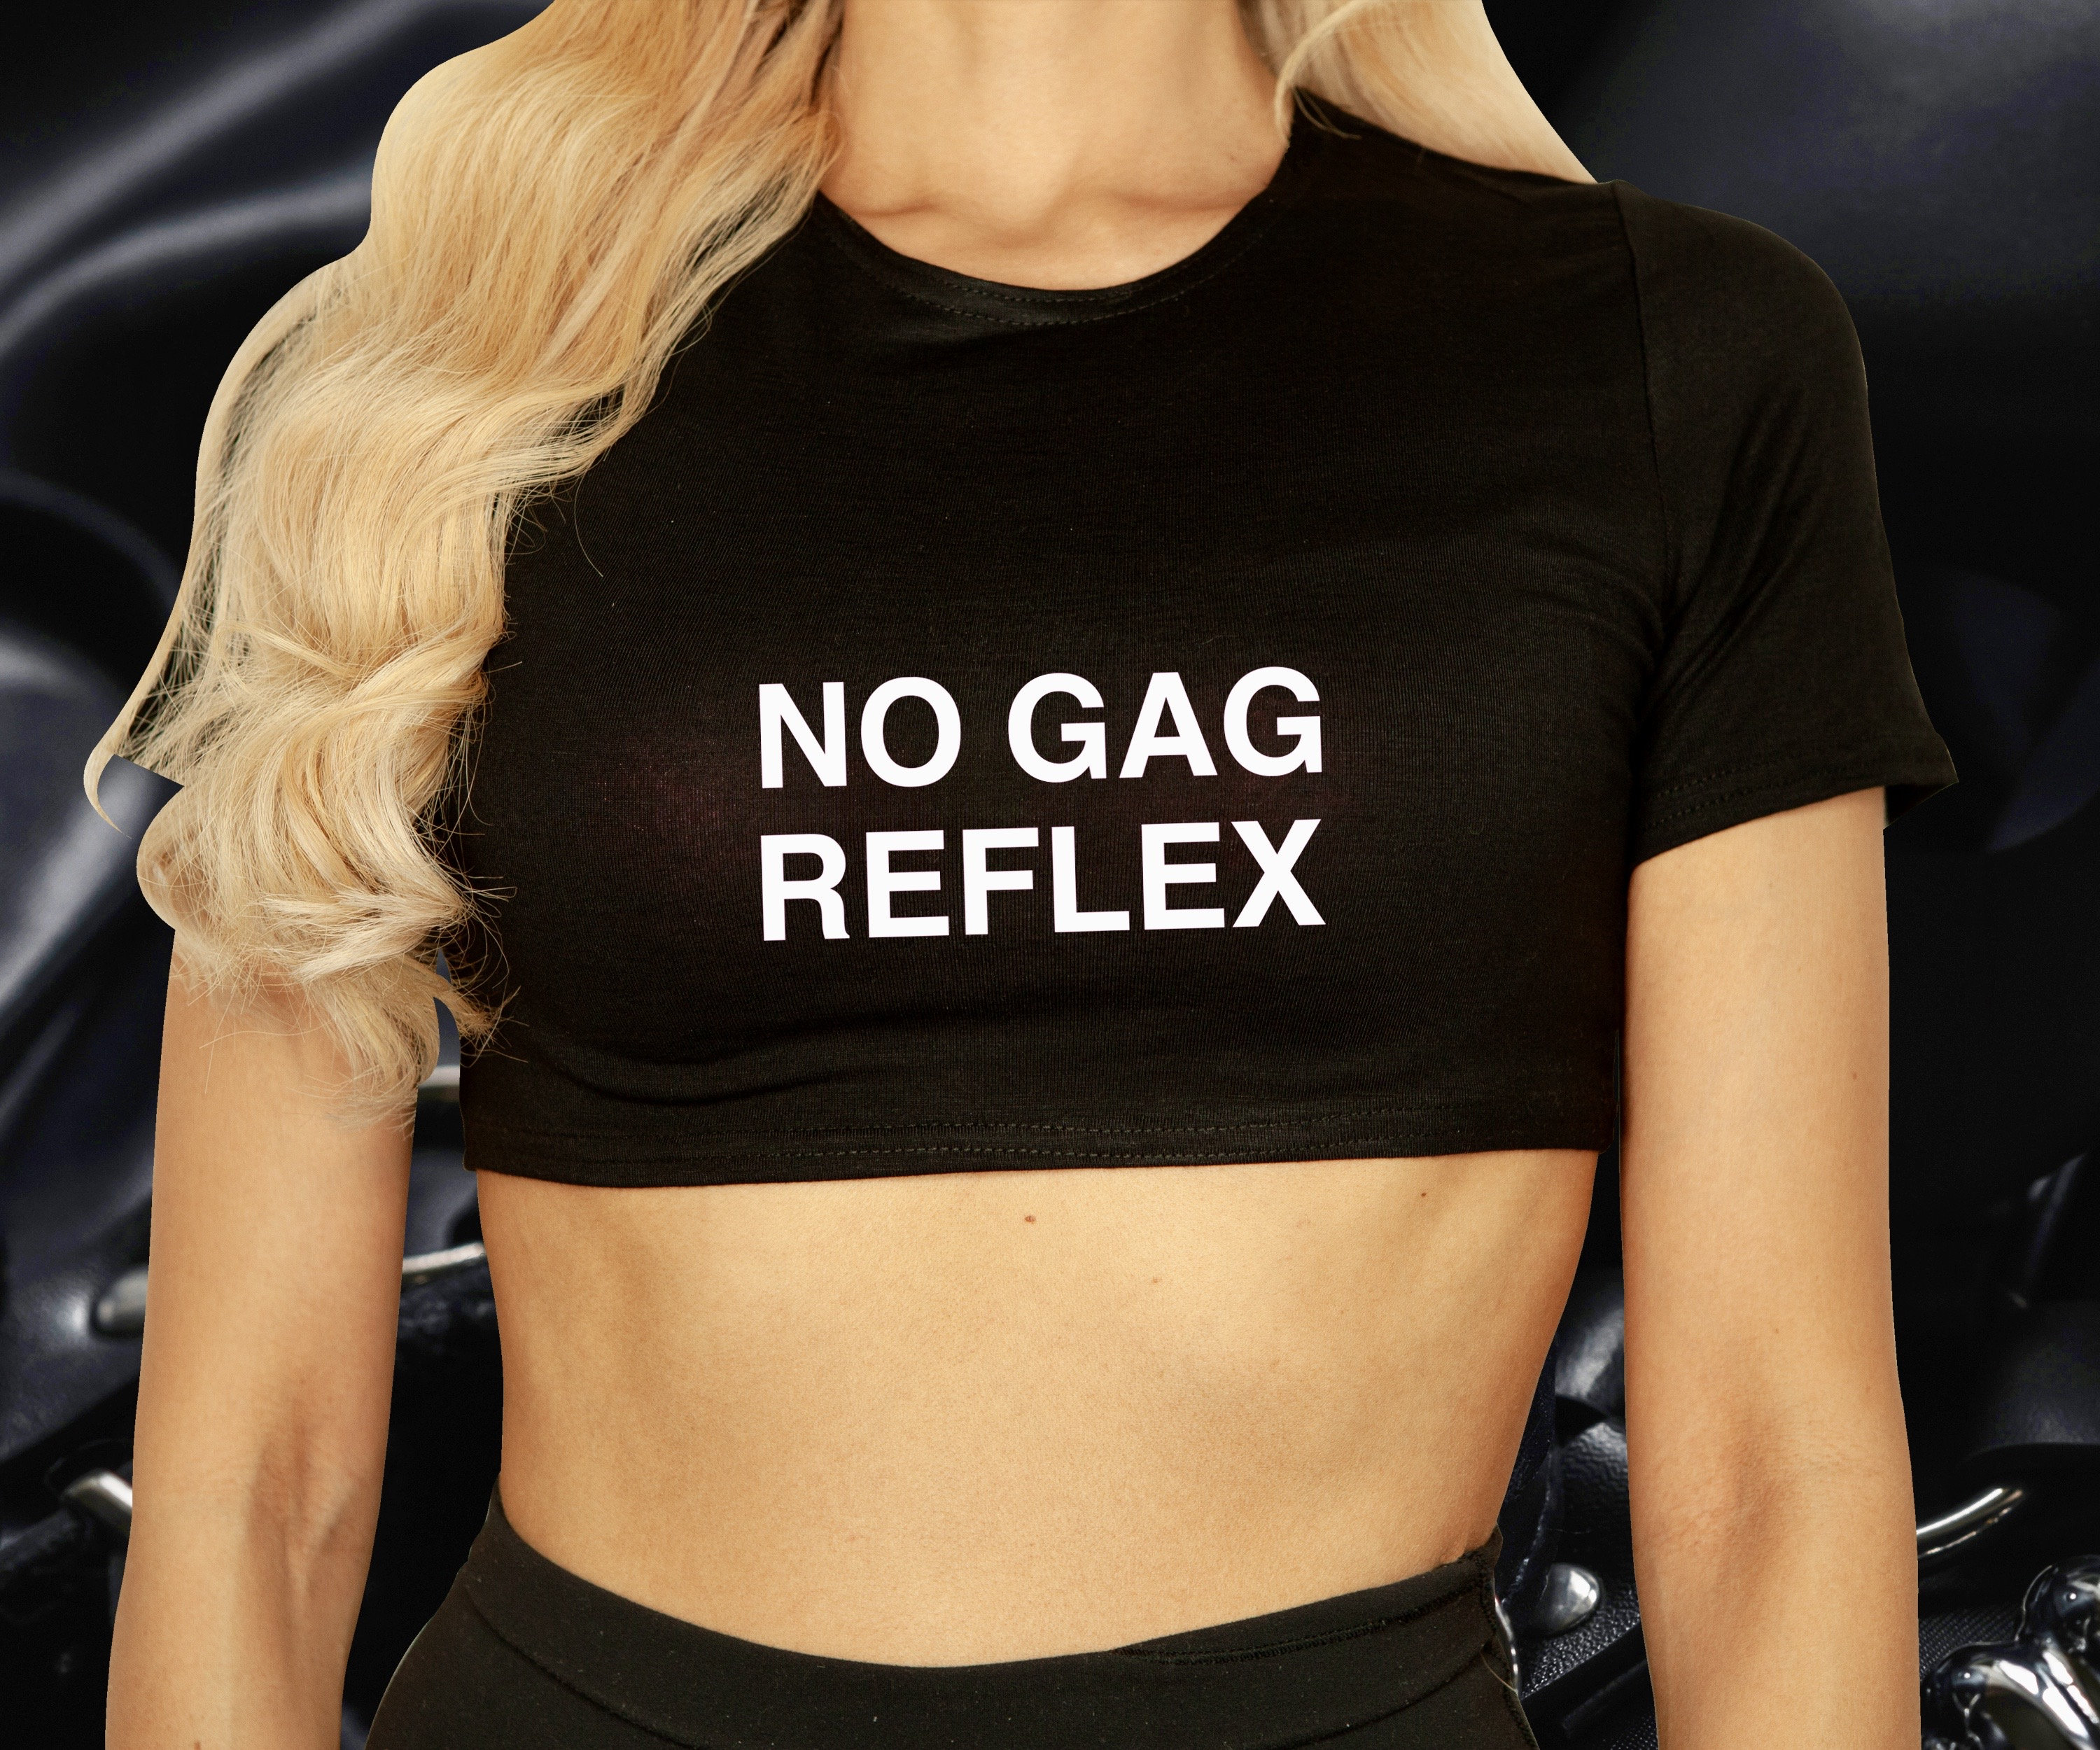 No Gag Reflex Crop Top Slut DDLG Clothing BDSM Bimbo.